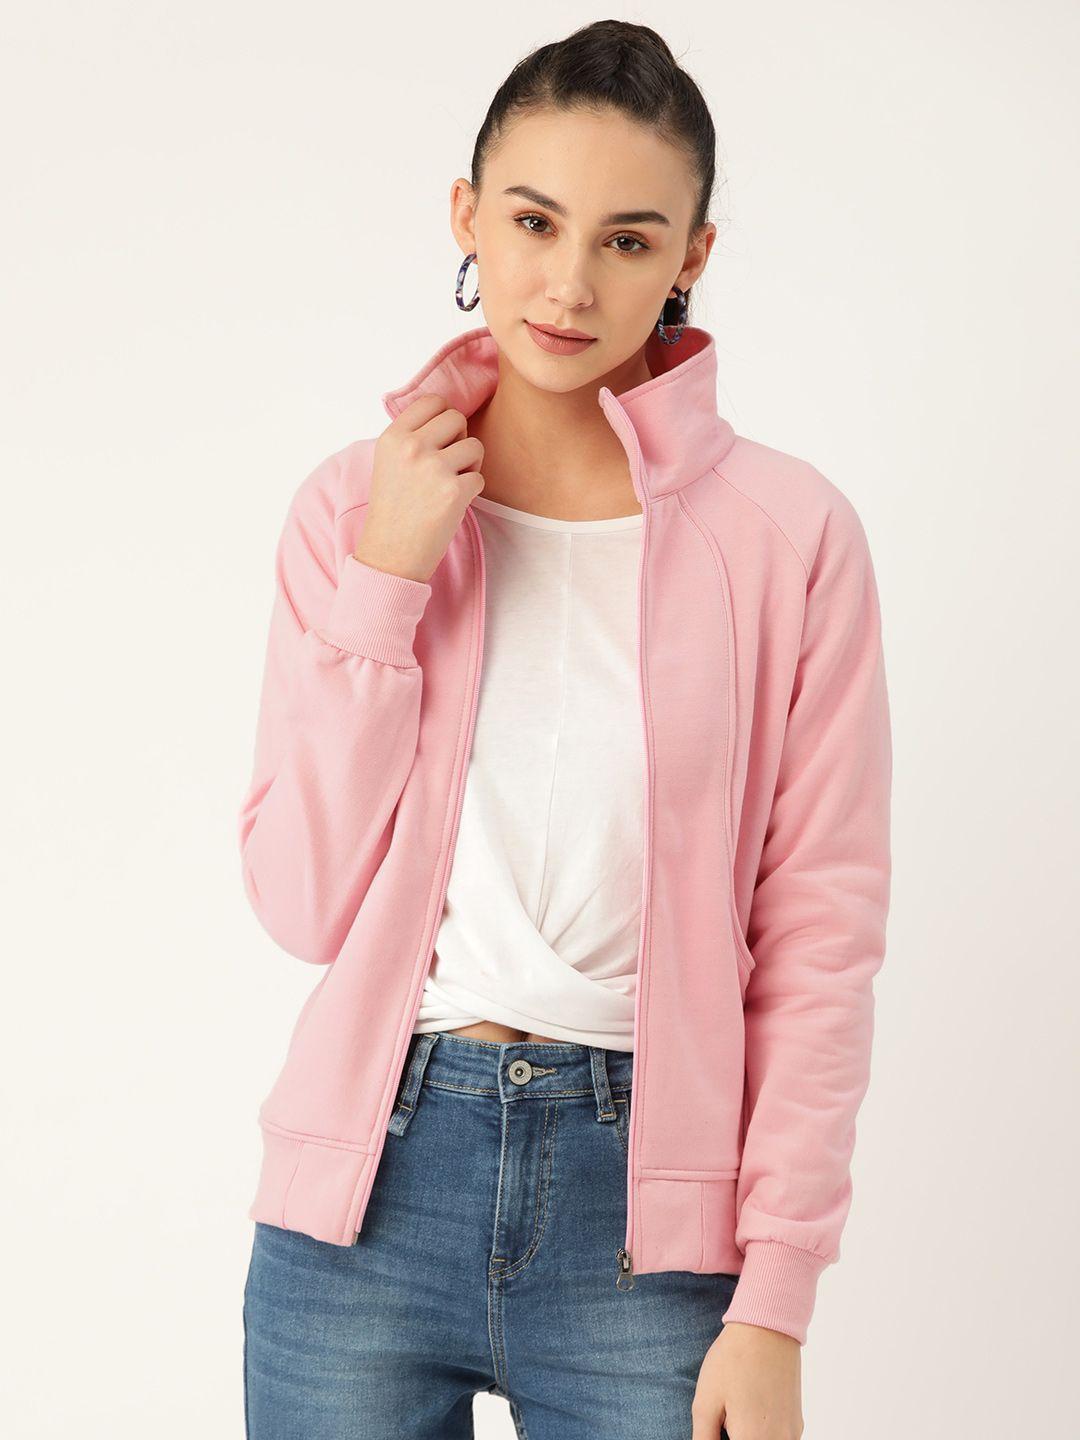 alsace lorraine paris women pink solid sweatshirt